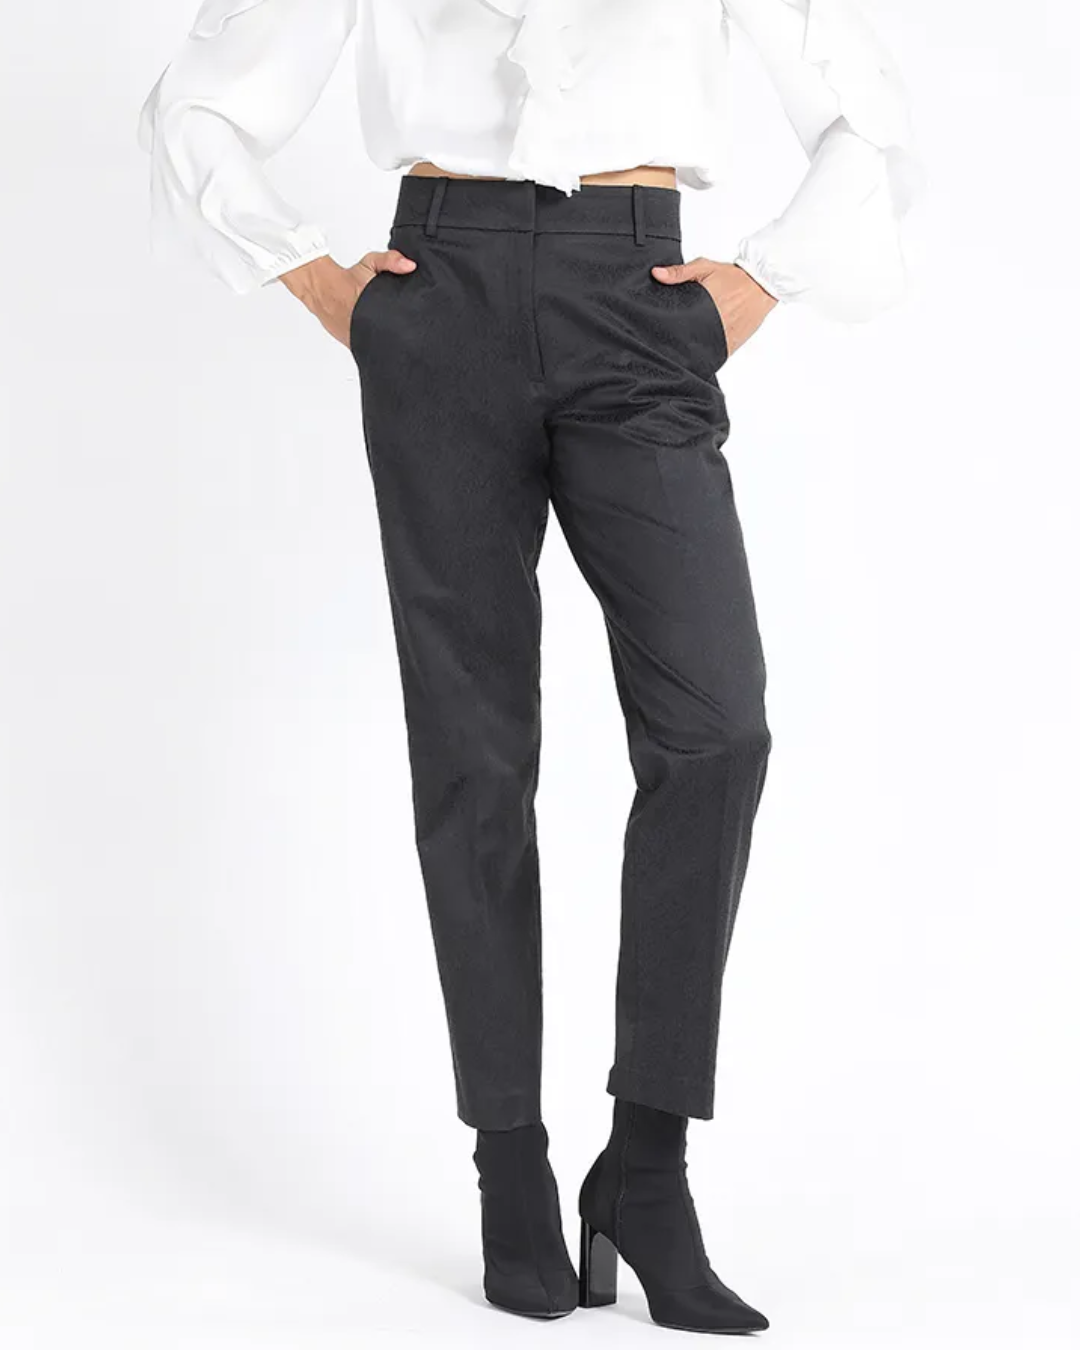 Pantalon sastre jacquard negro Liola